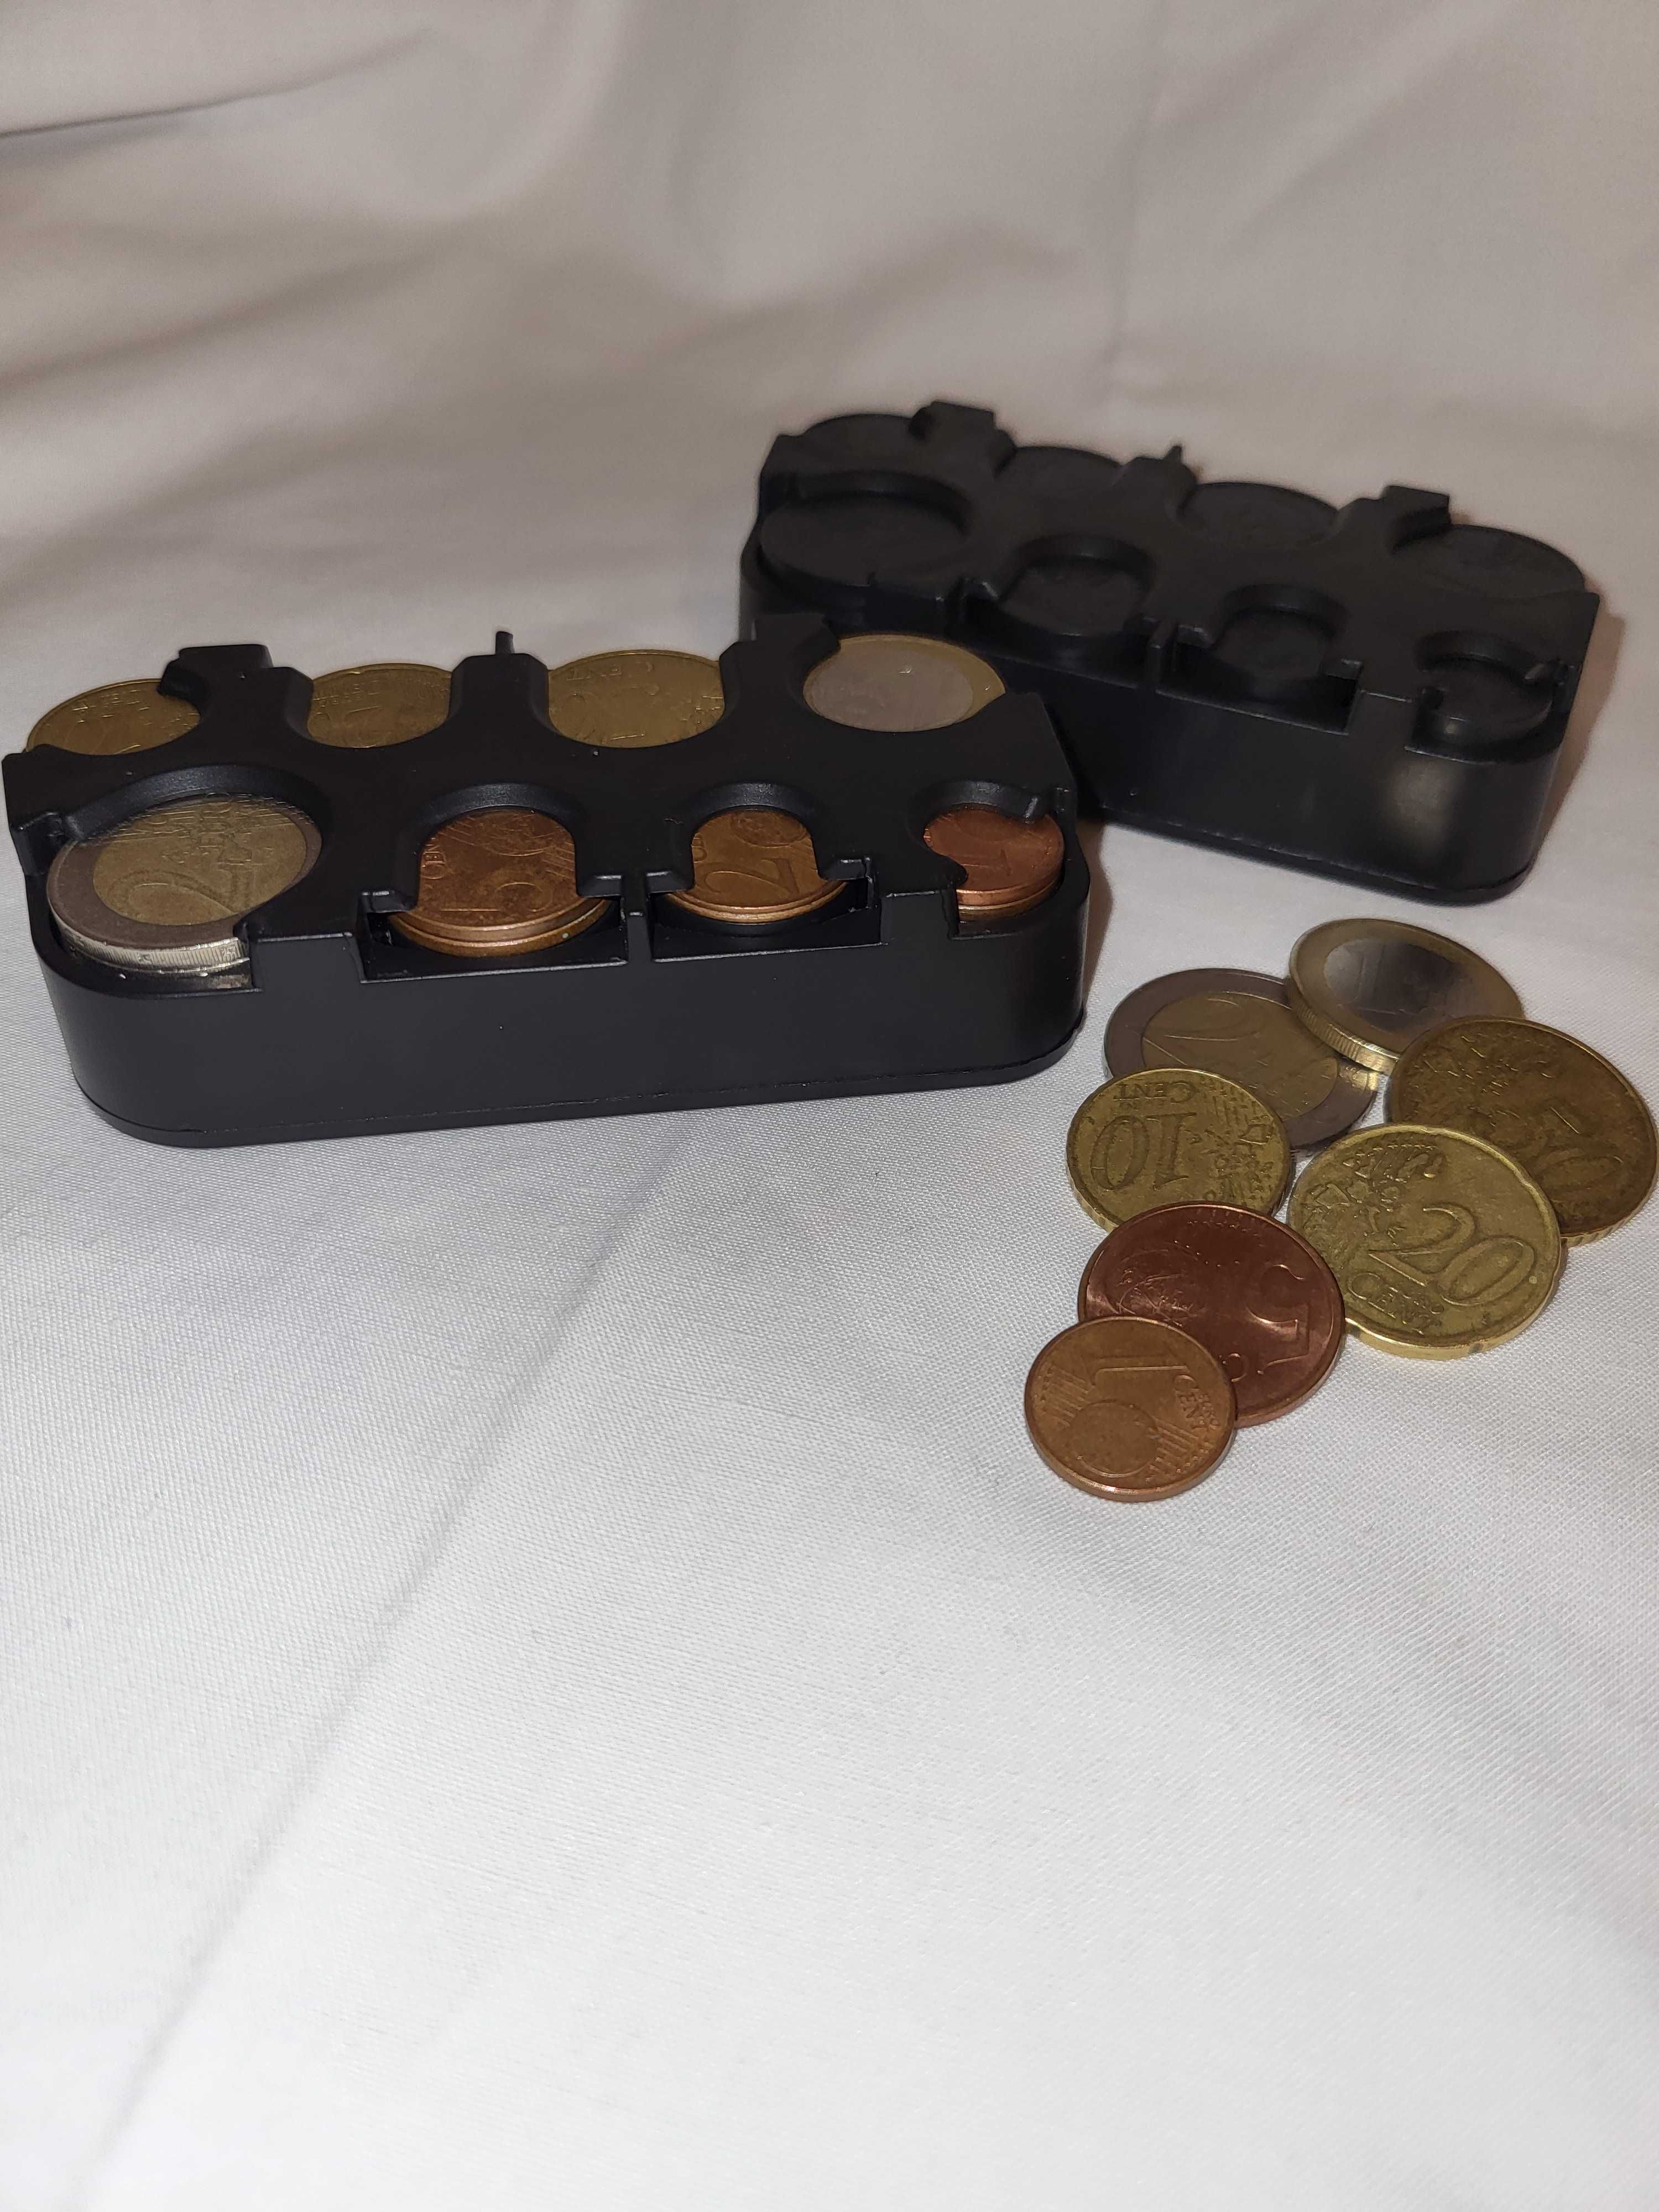 Organizador de moedas para estafetas